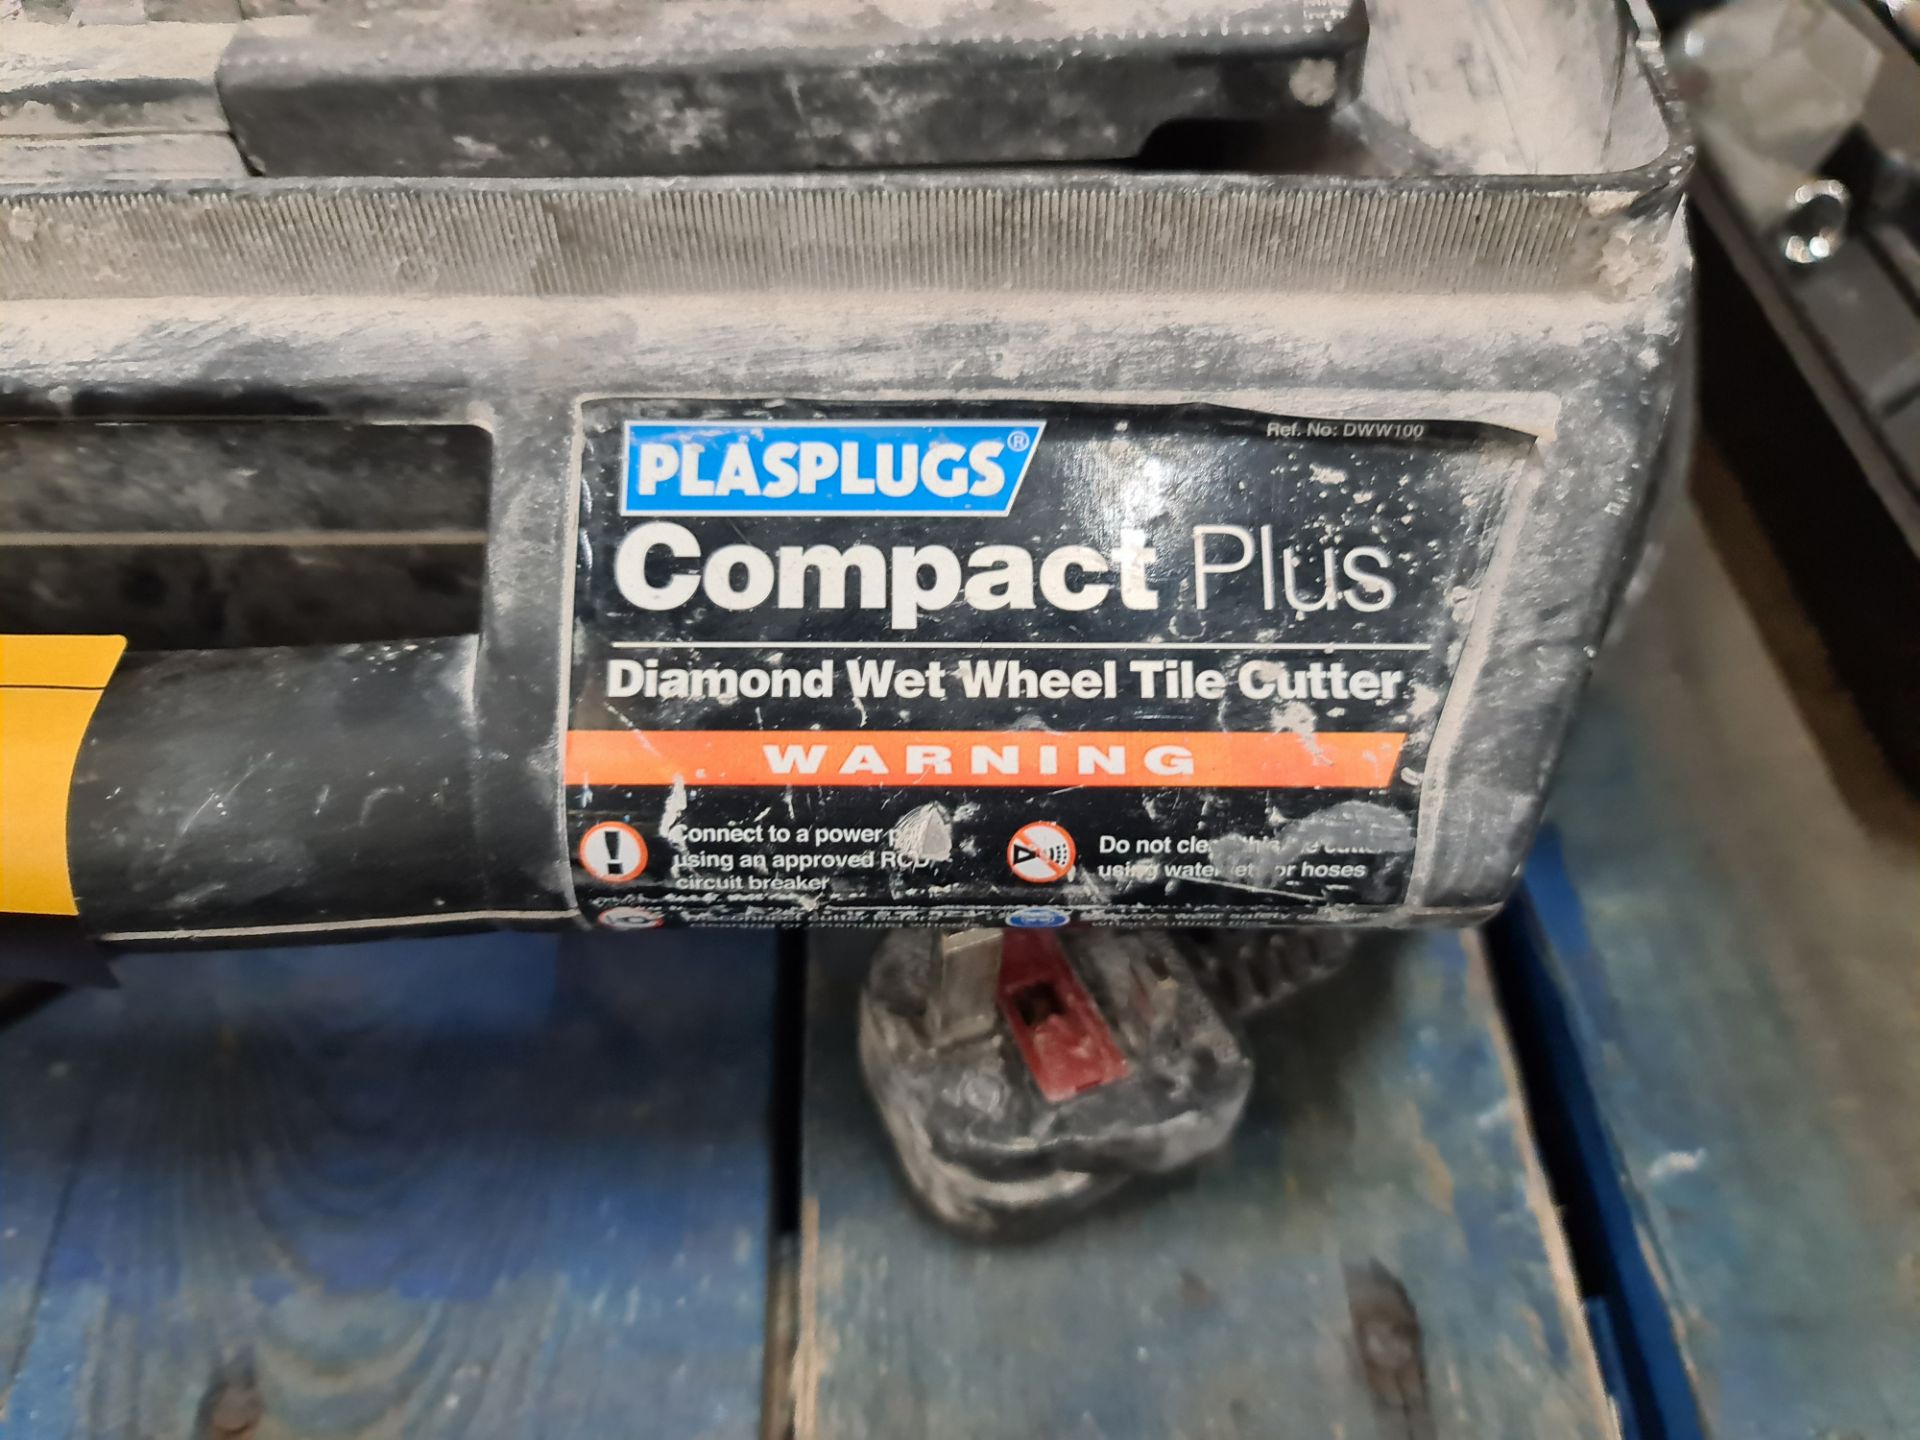 Plasplugs compact plus diamond wet wheel tyre cutter - Image 4 of 4